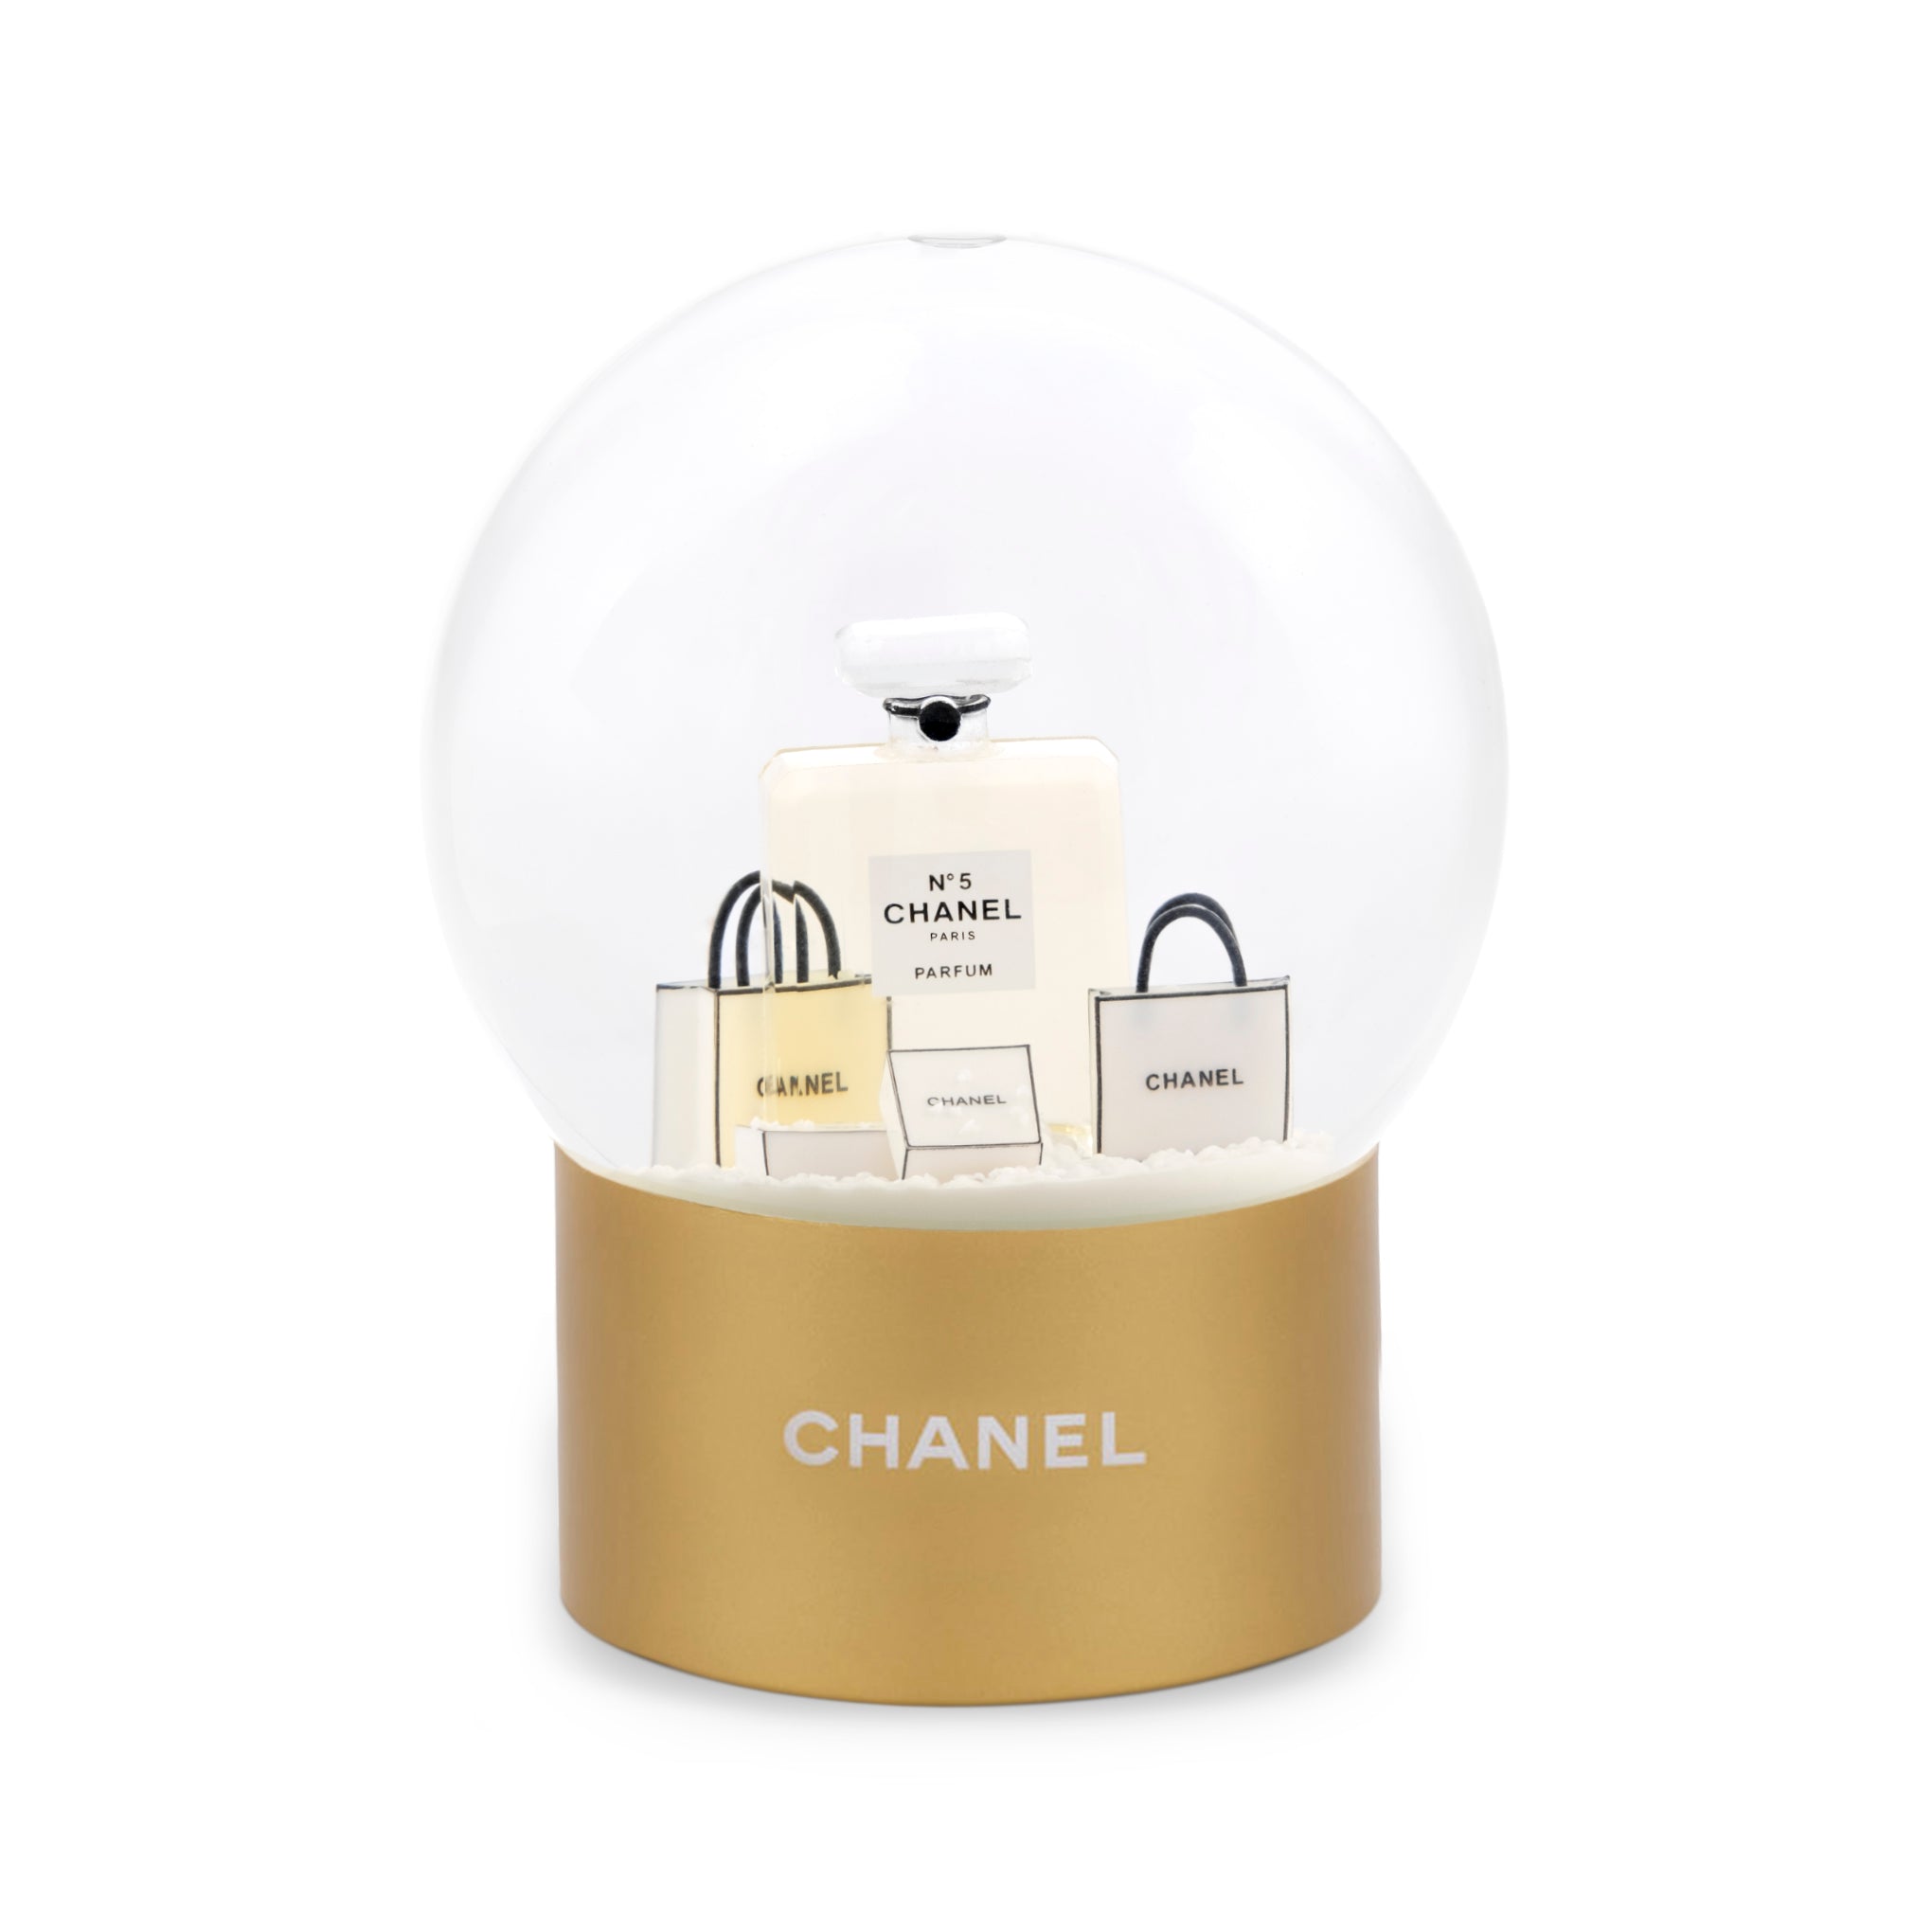 Chanel Snow Globe